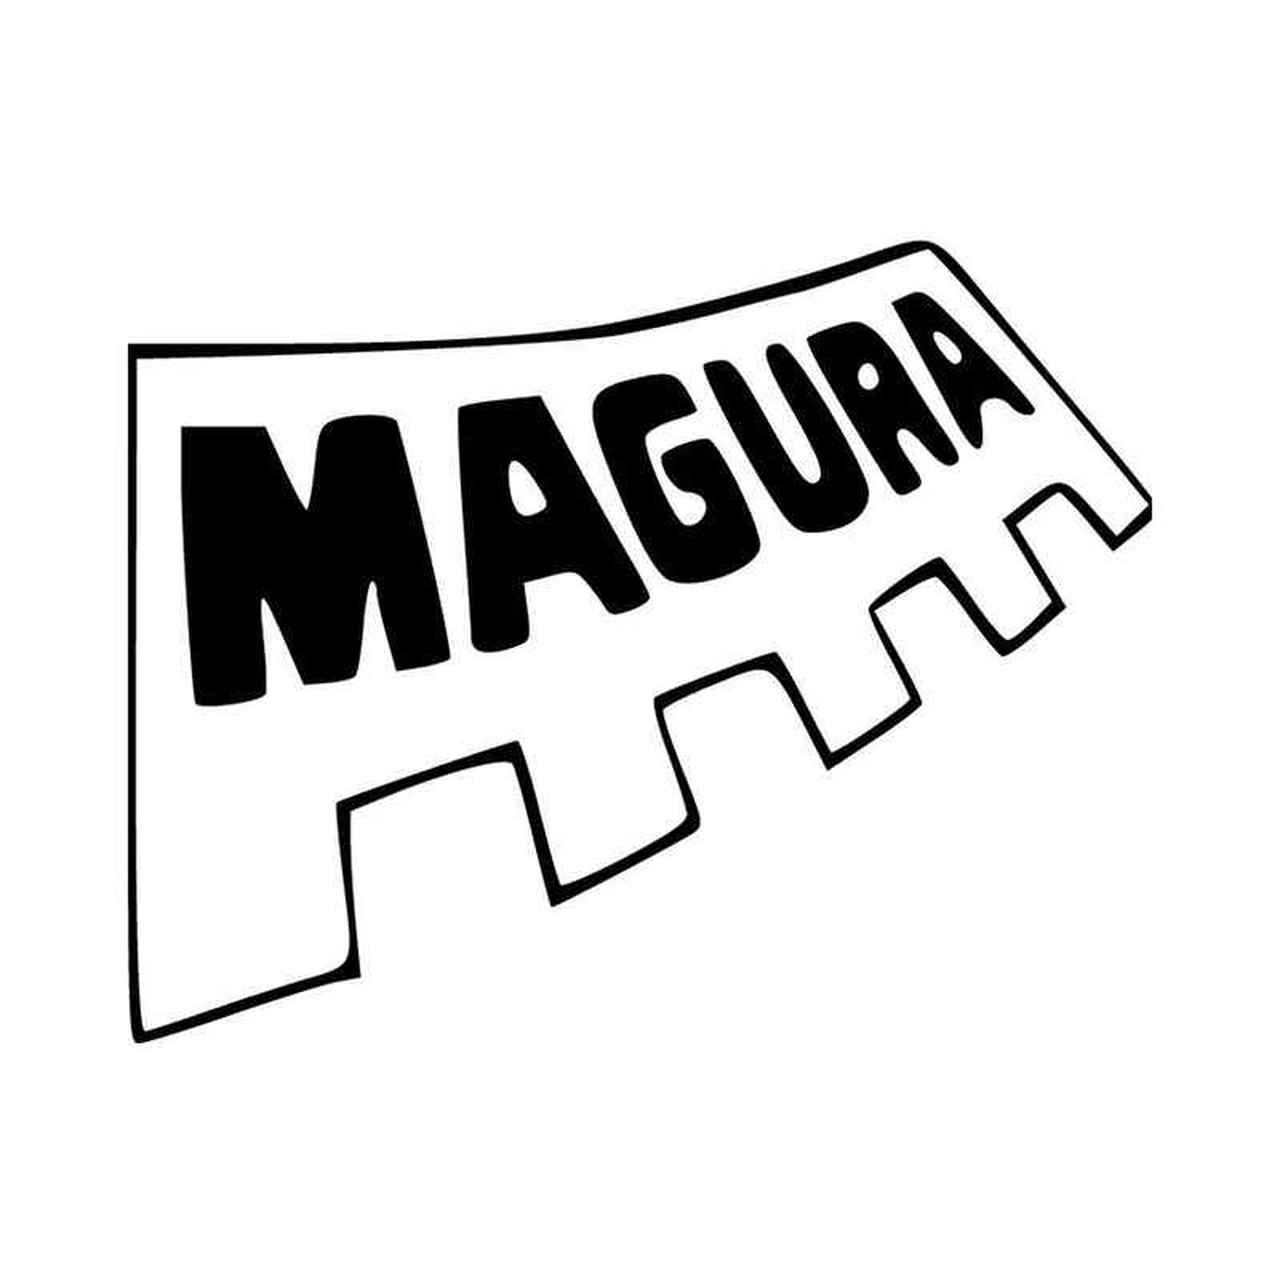 Magura Logo - Magura Logo Vinyl Decal Sticker